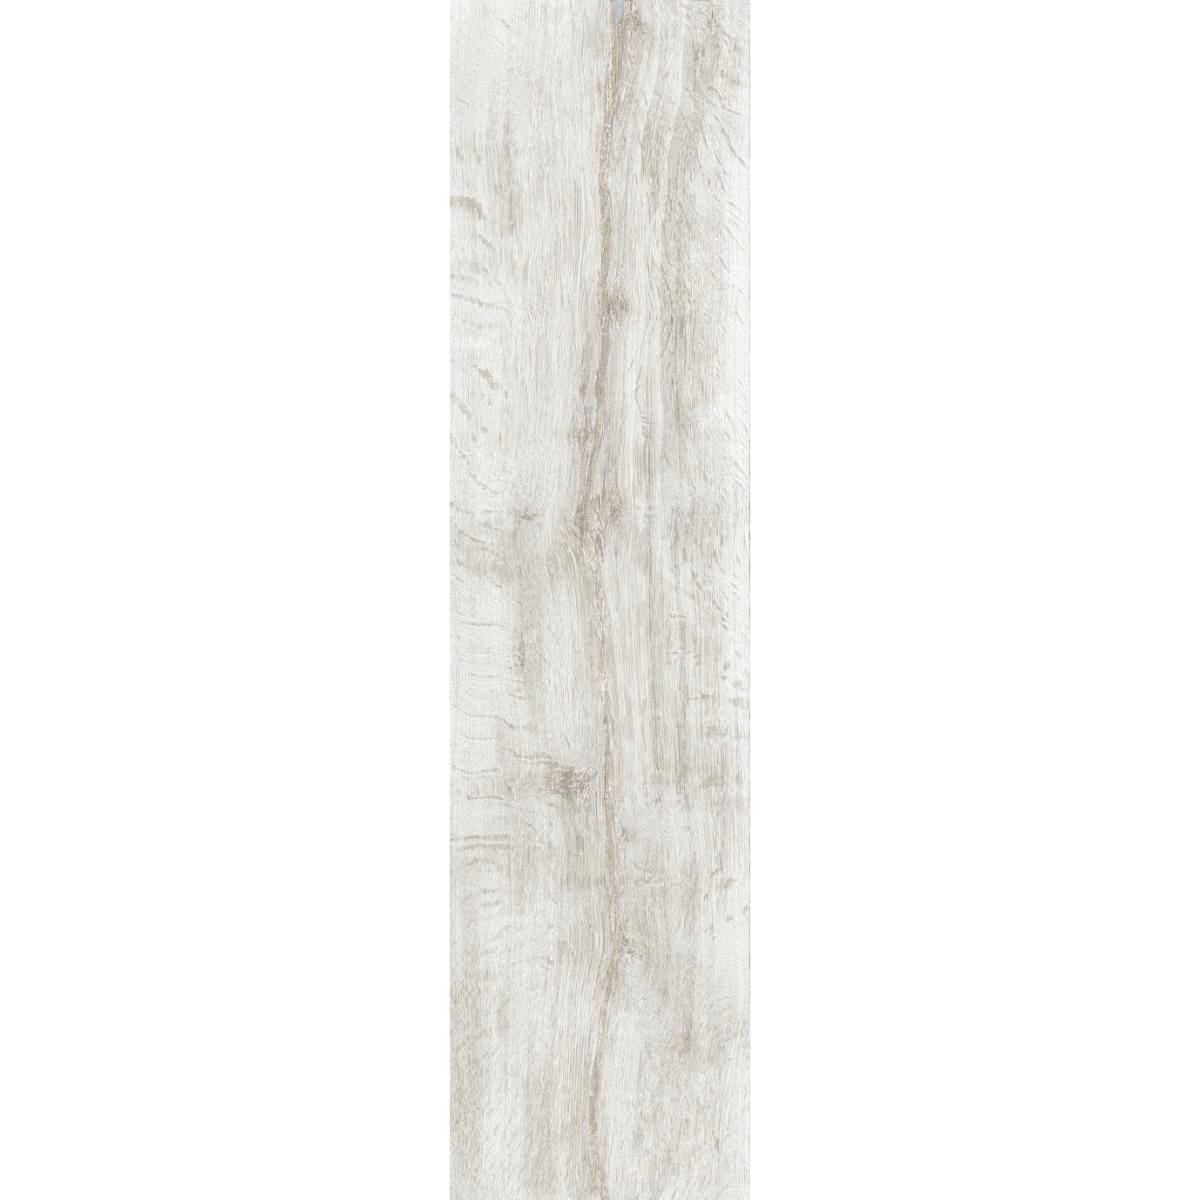 Woodland White Wood Effect Porcelain Tile 15x58cm